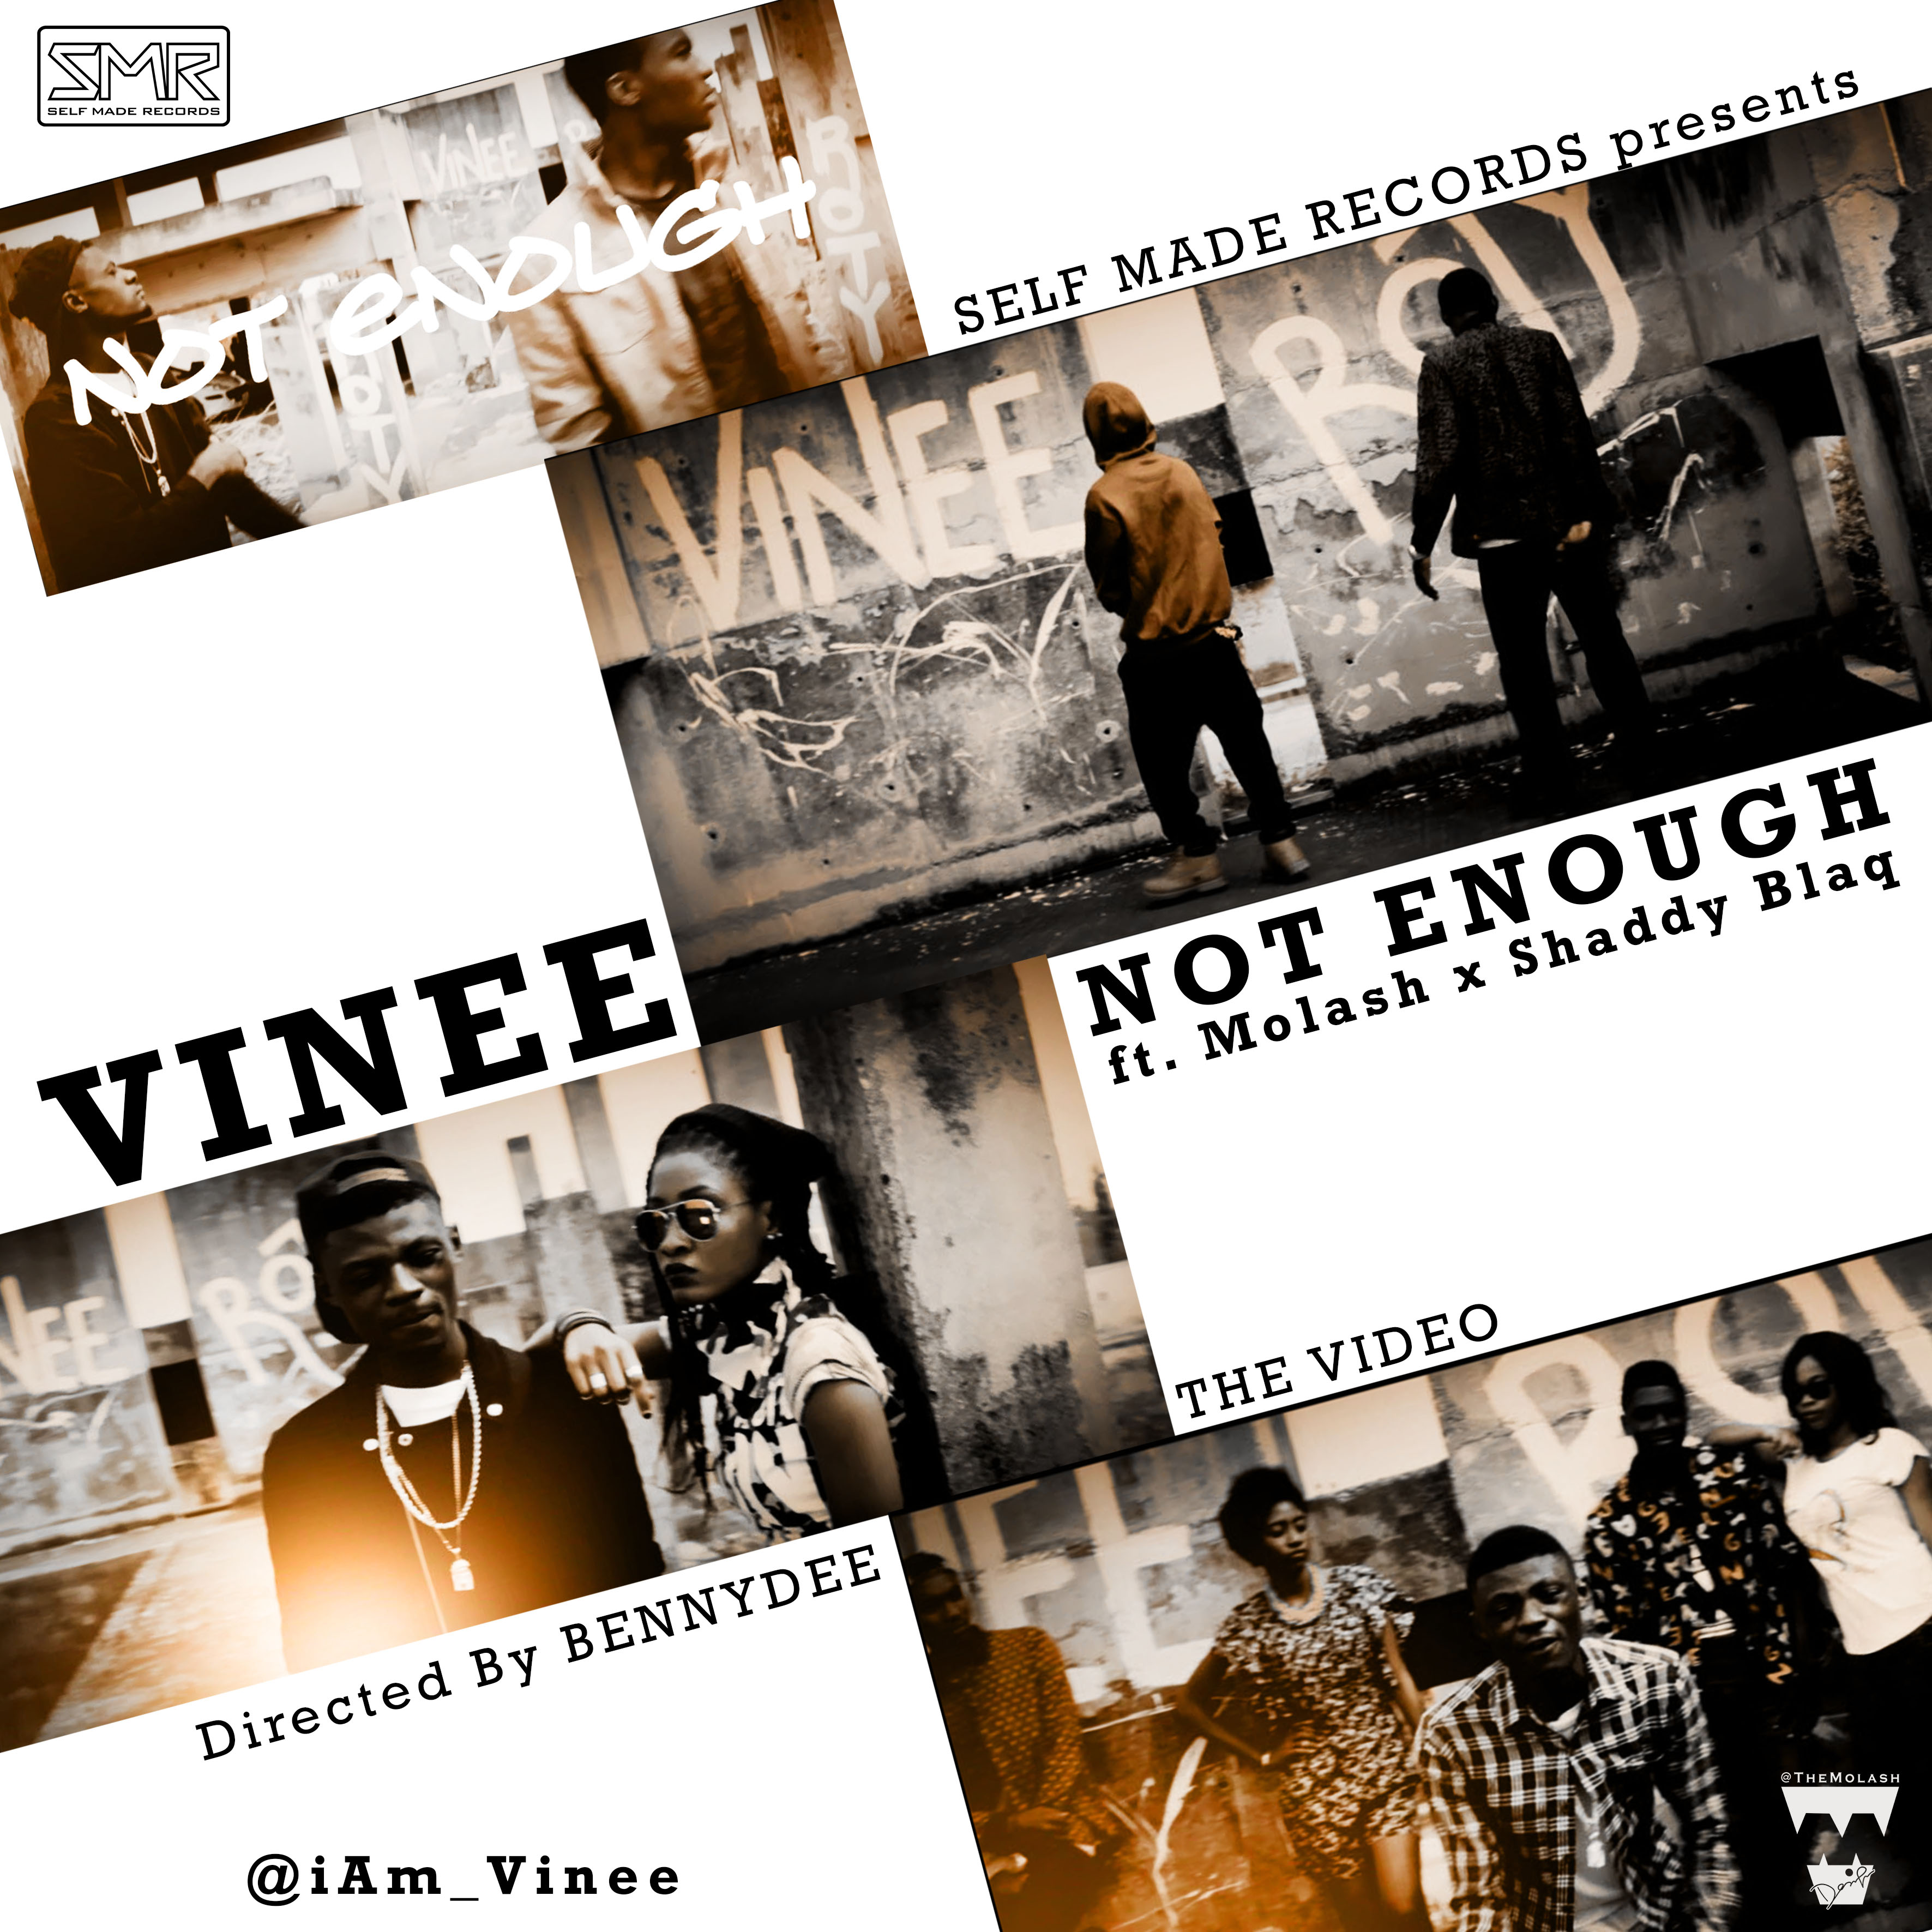 VIDEO: Vinee - Not Enough ft. Molash & Shaddy Blaq